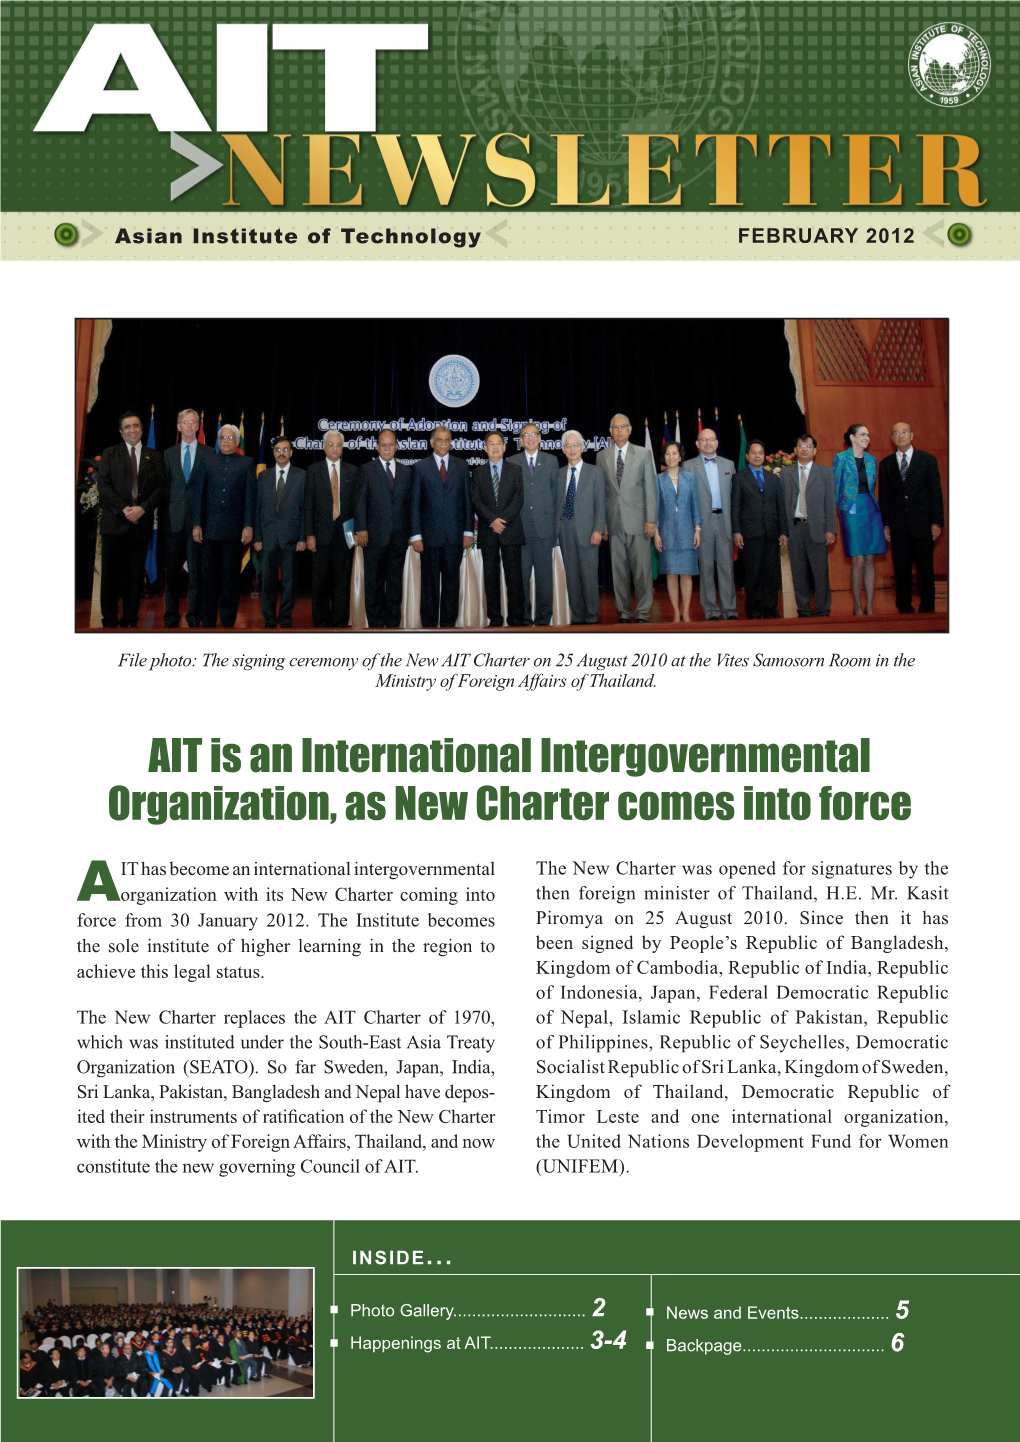 AIT Has Become an International Intergovernmental